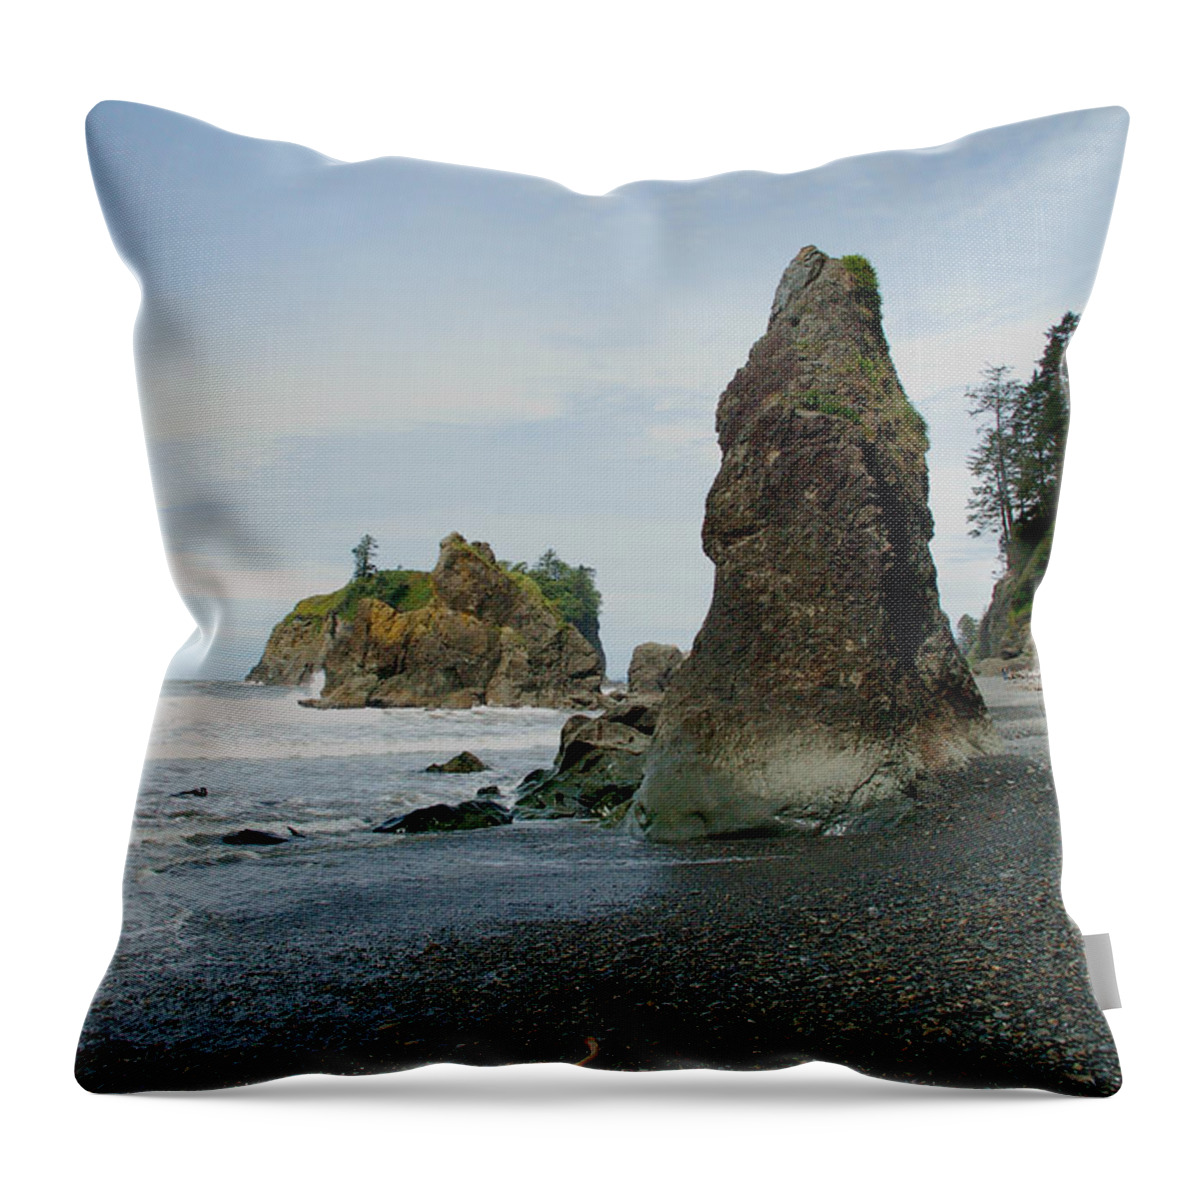 Washington Throw Pillow featuring the photograph Washington State Seashore by Nancy Landry